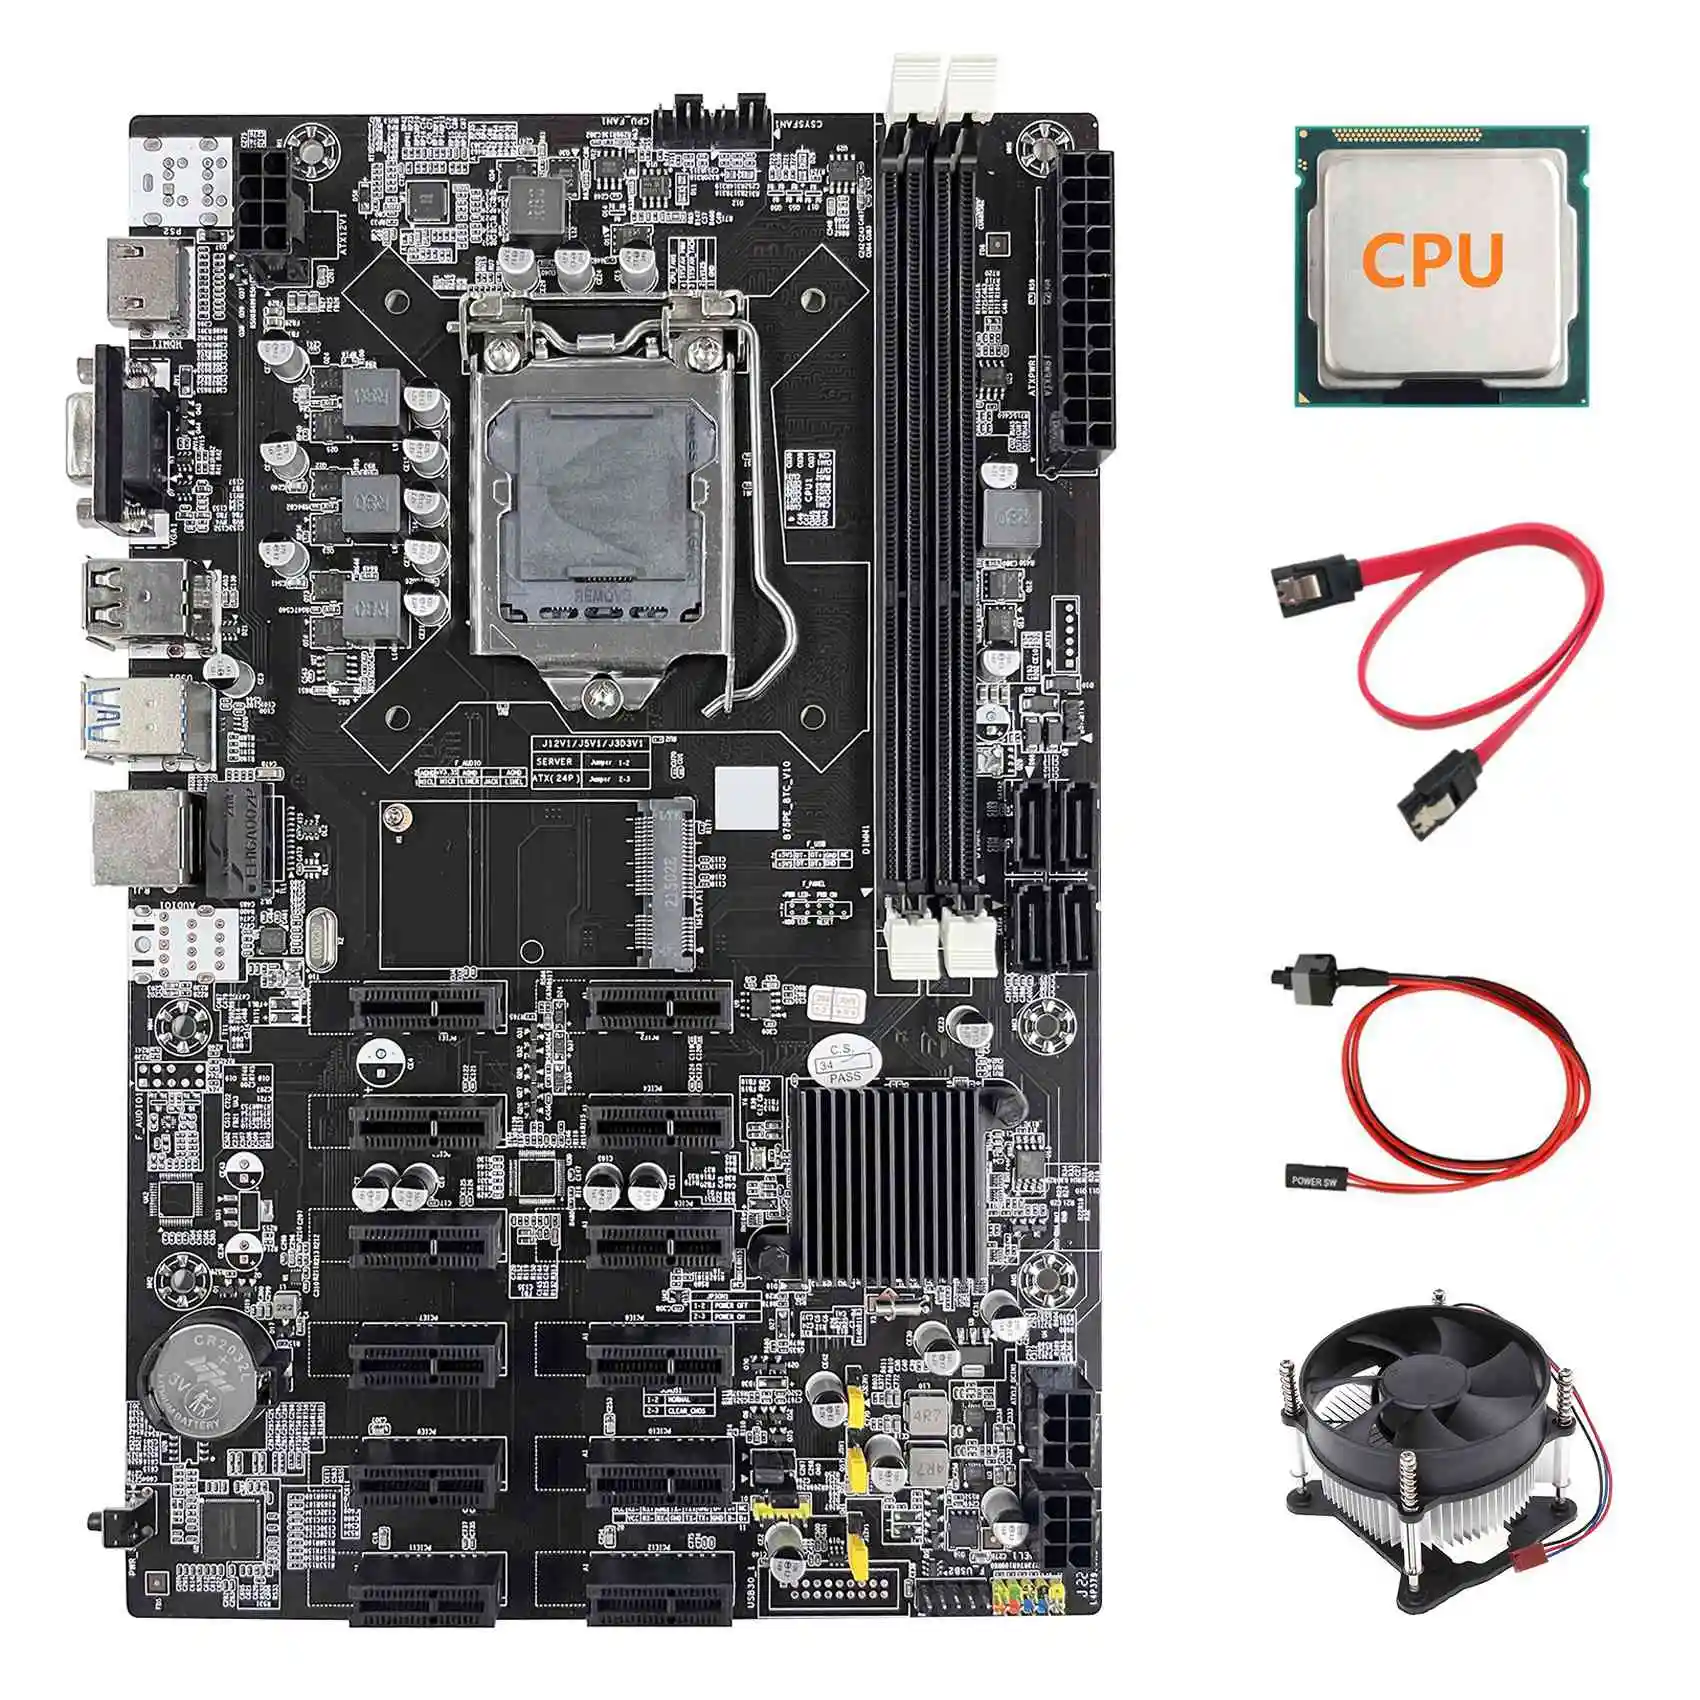 B75 12 PCIE ETH Mining Motherboard+Random CPU+Fan+SATA Cable+Switch Cable LGA1155 MSATA DDR3 B75 BTC Miner Motherboard